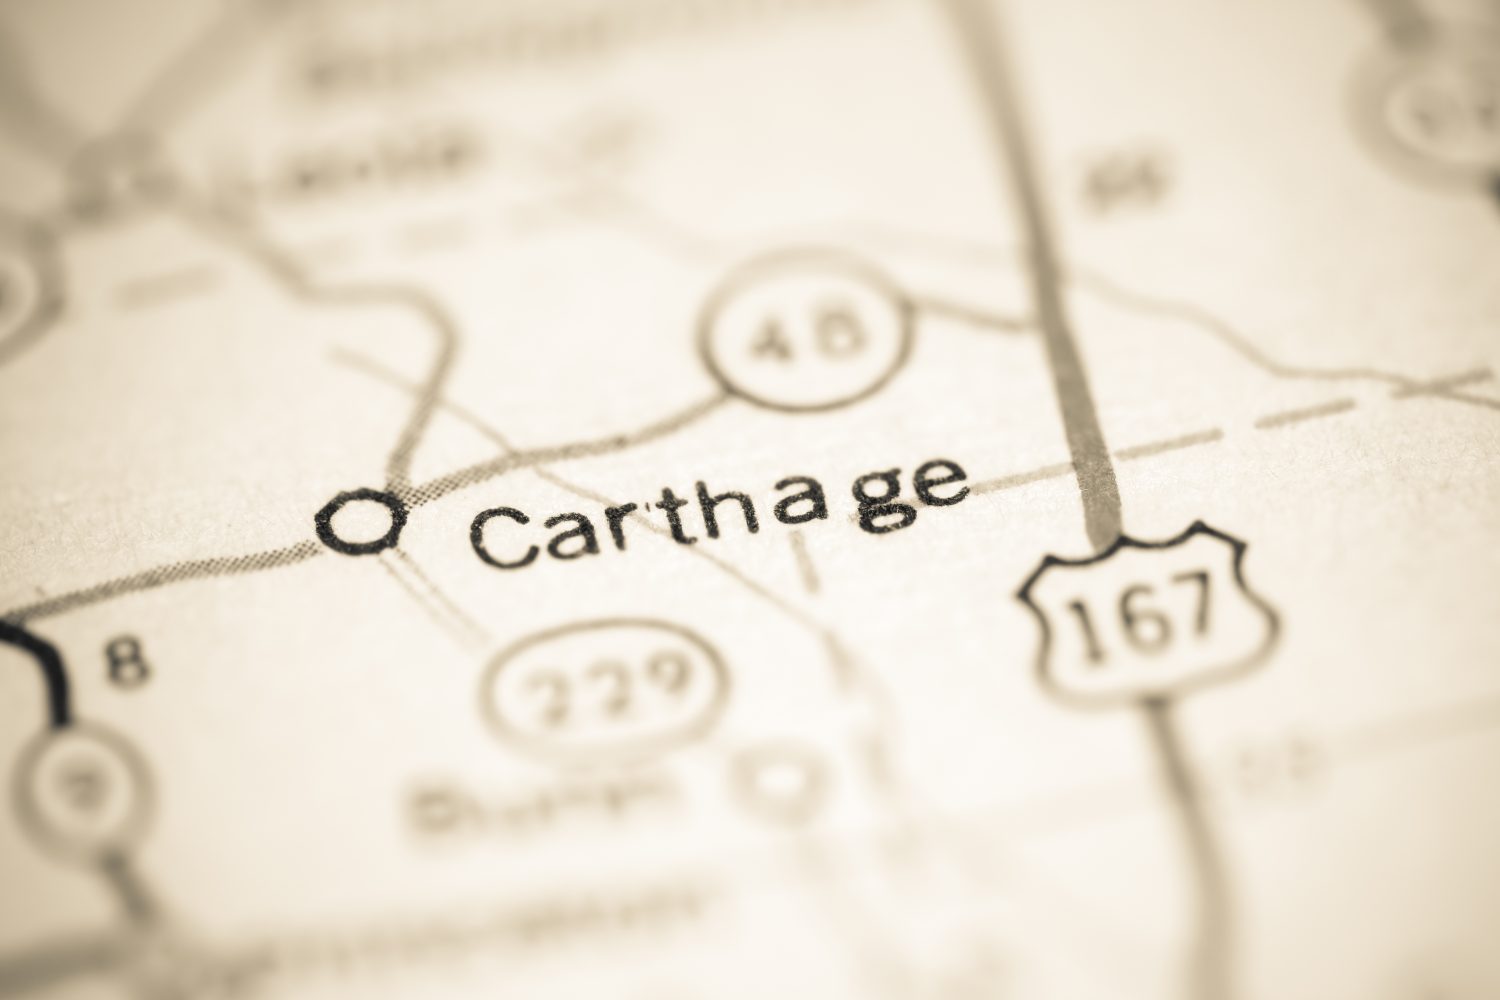 Carthage. Arkansas. USA on a geography map